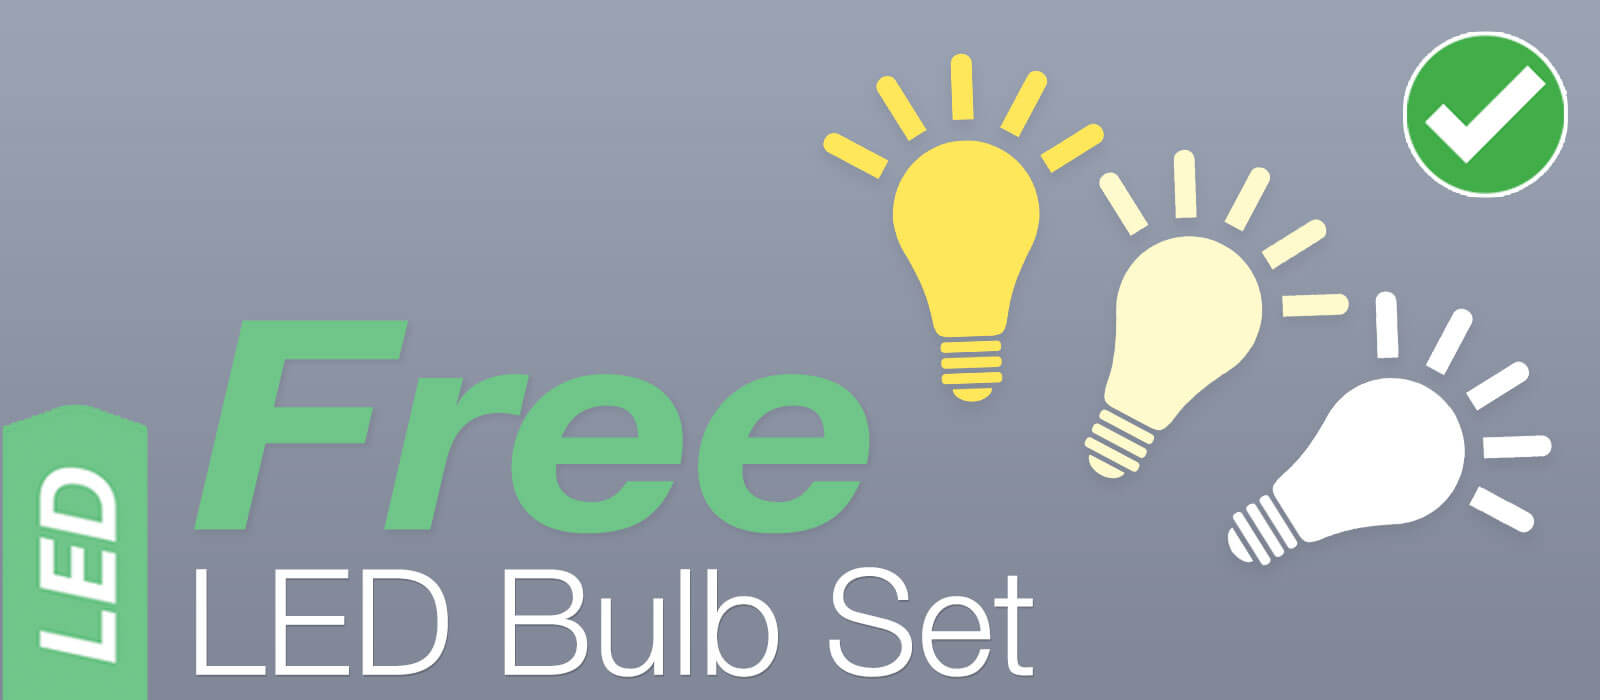 free led light bulb set post featured image ledlam lighting